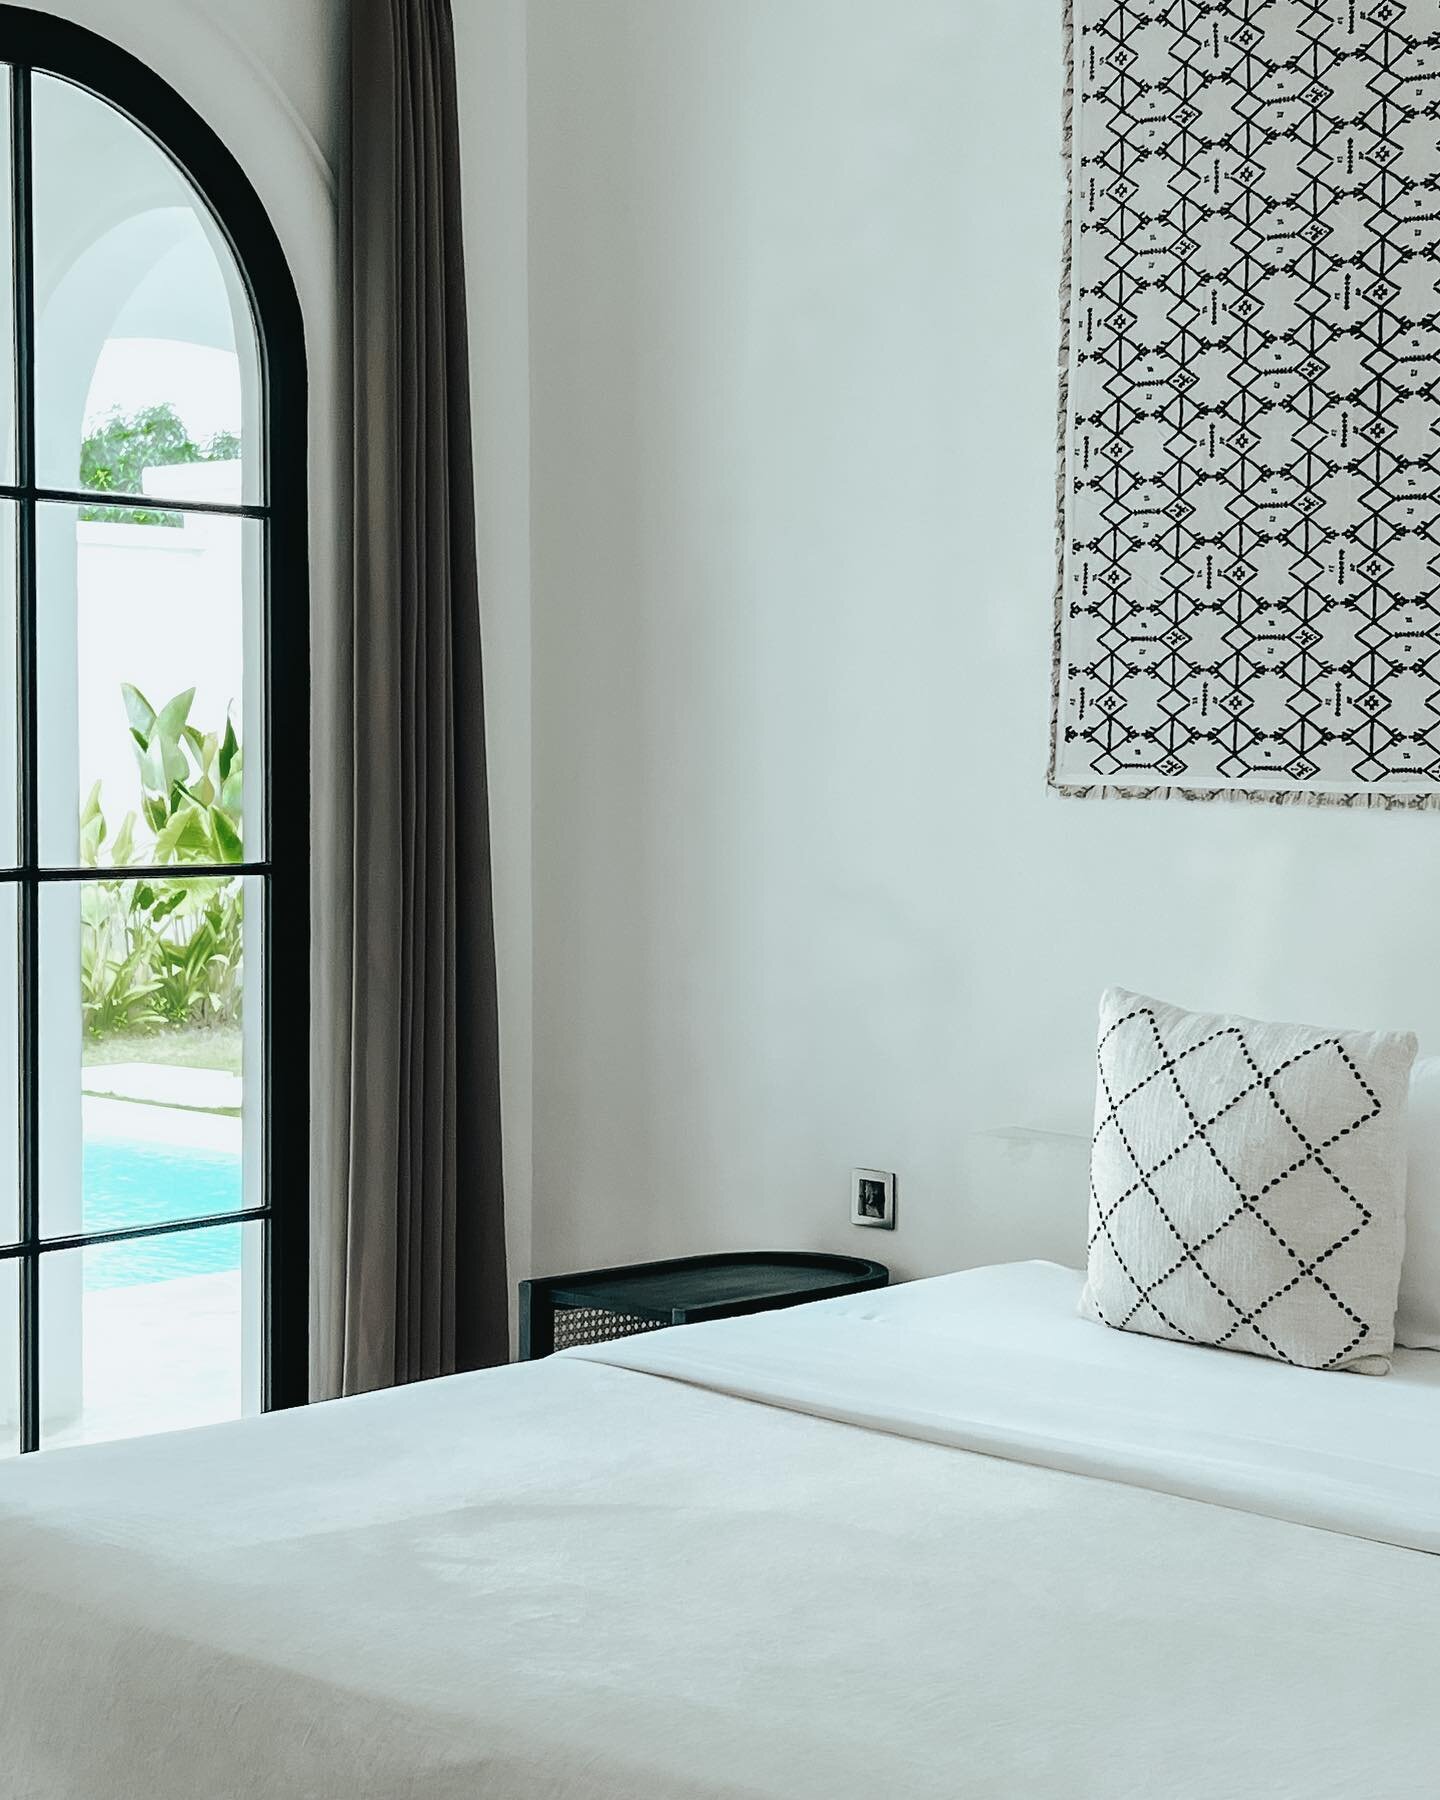 Our cozy little nook ✨

#morningglory #bedroom #archilovers #interiordesign #bali #canggu